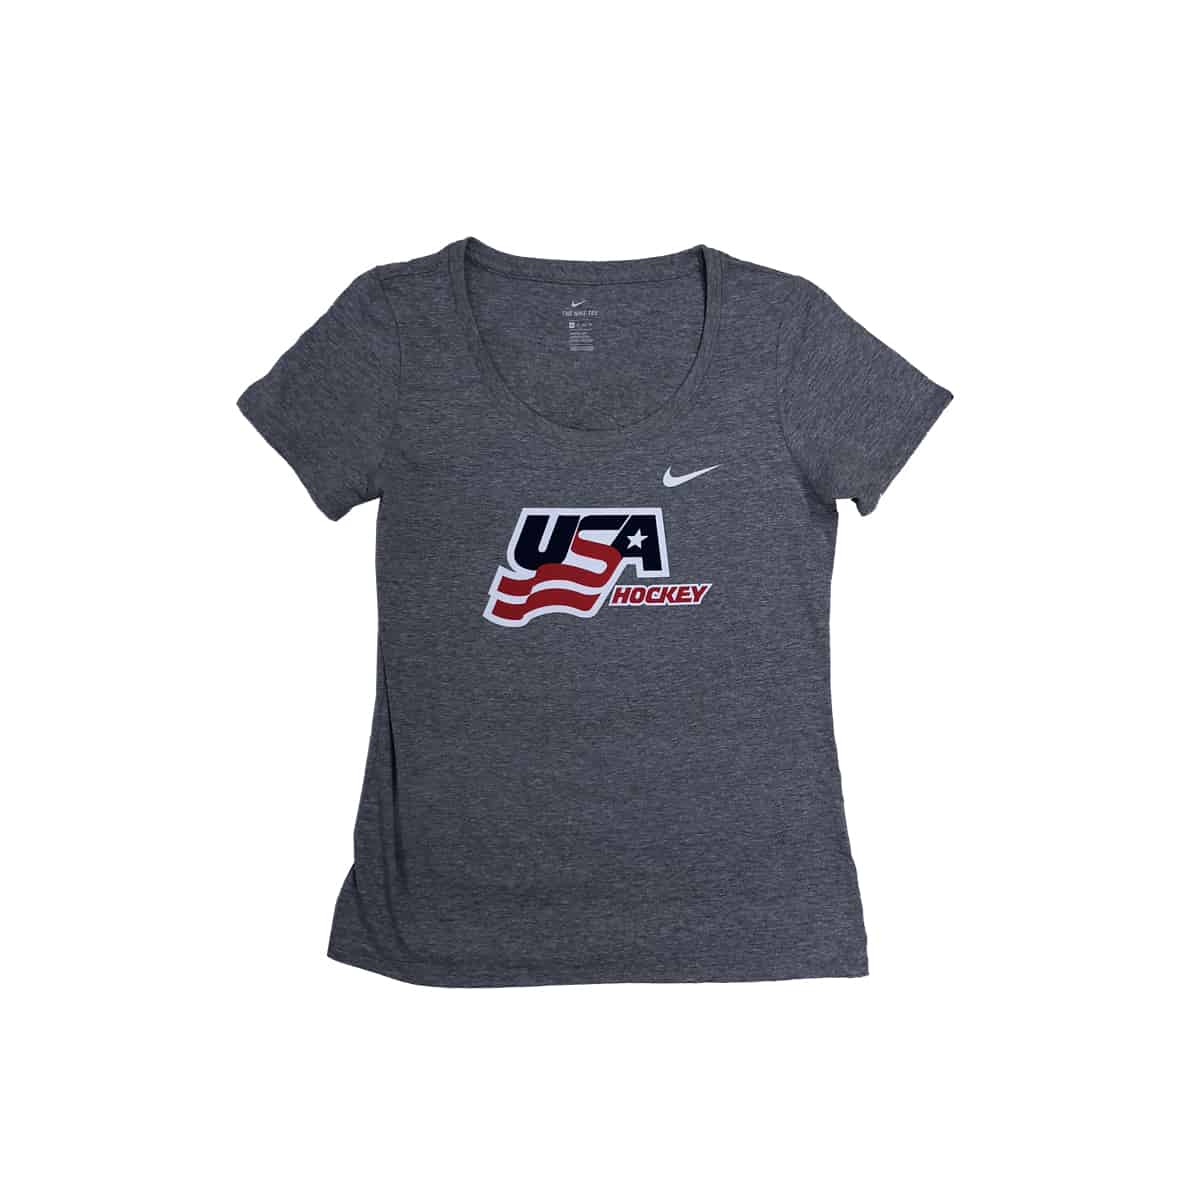 USA Hockey Nike Women's Atheletic Scoop Neck Tee